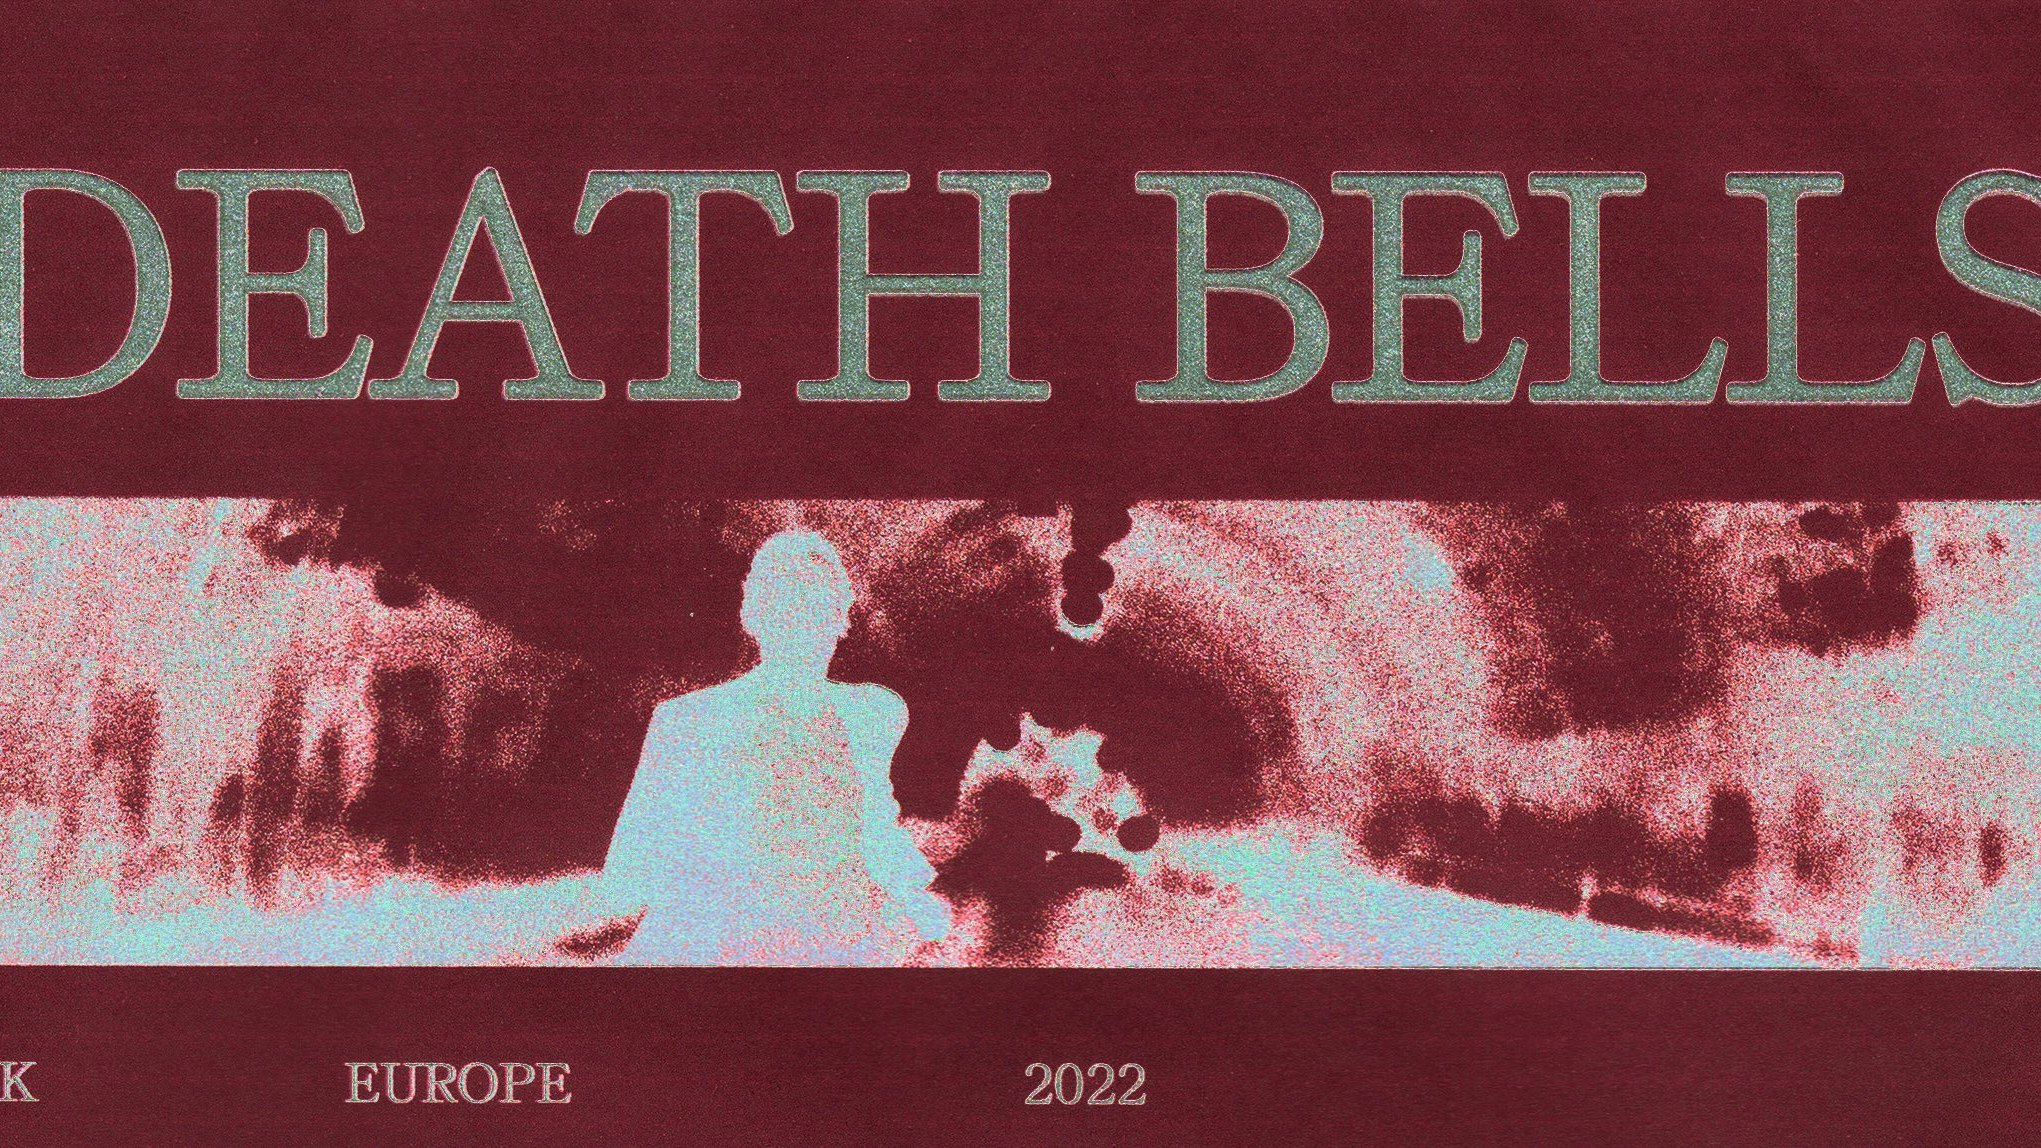 Death Bells + Numb.er & Haxton Baby